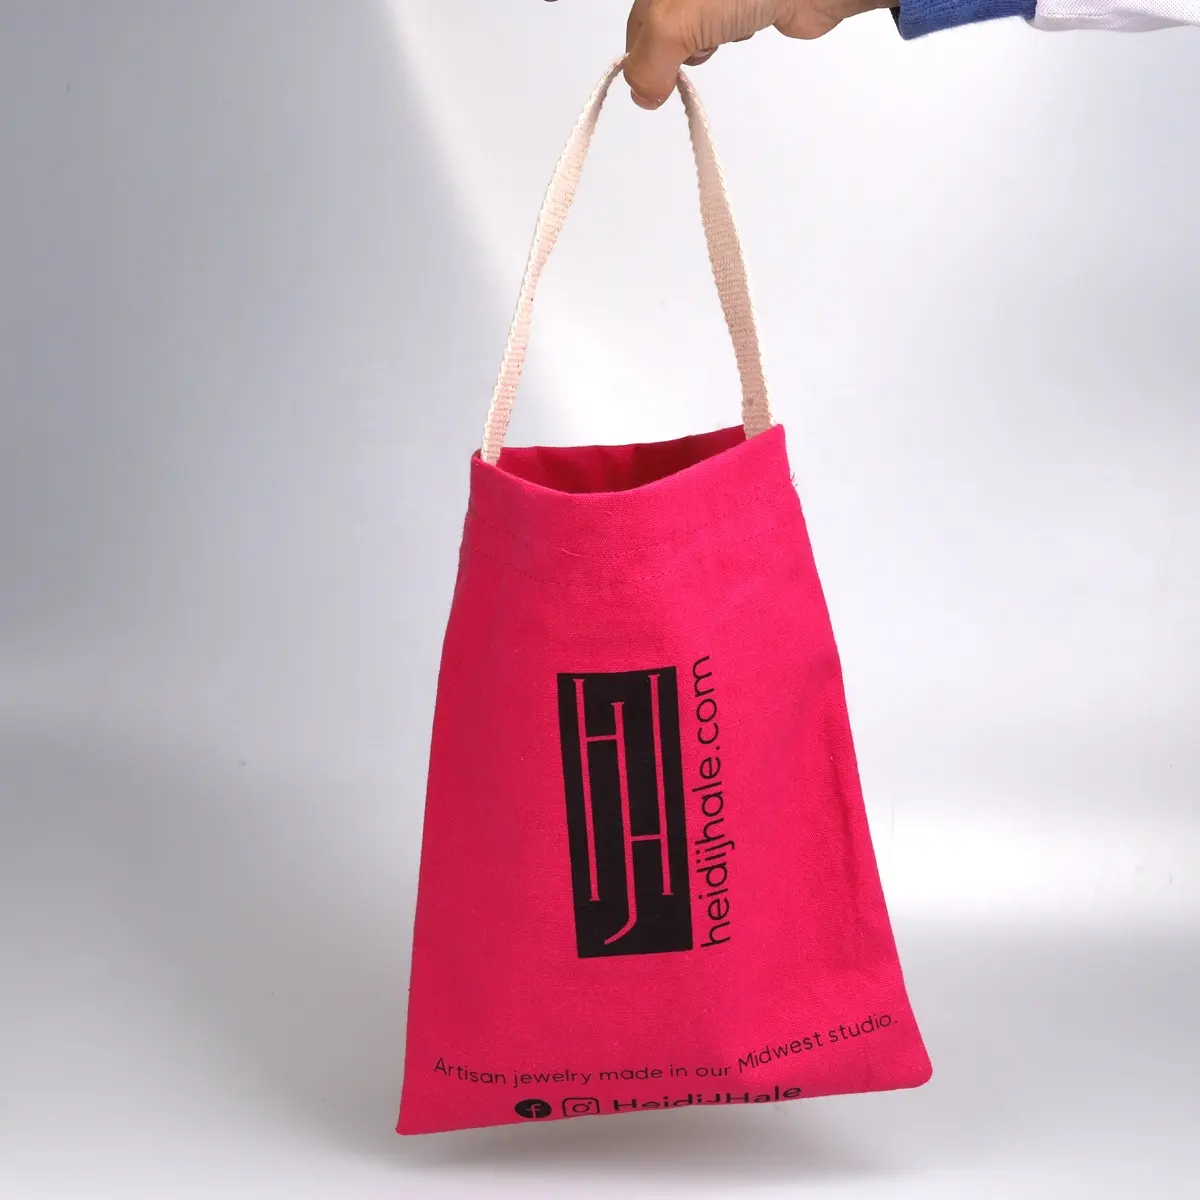 कस्टम लोगो मुद्रण ढोना कैनवास शॉपिंग बैग गर्म बिक्री उपहार संभाल कैनवास कपास बैग